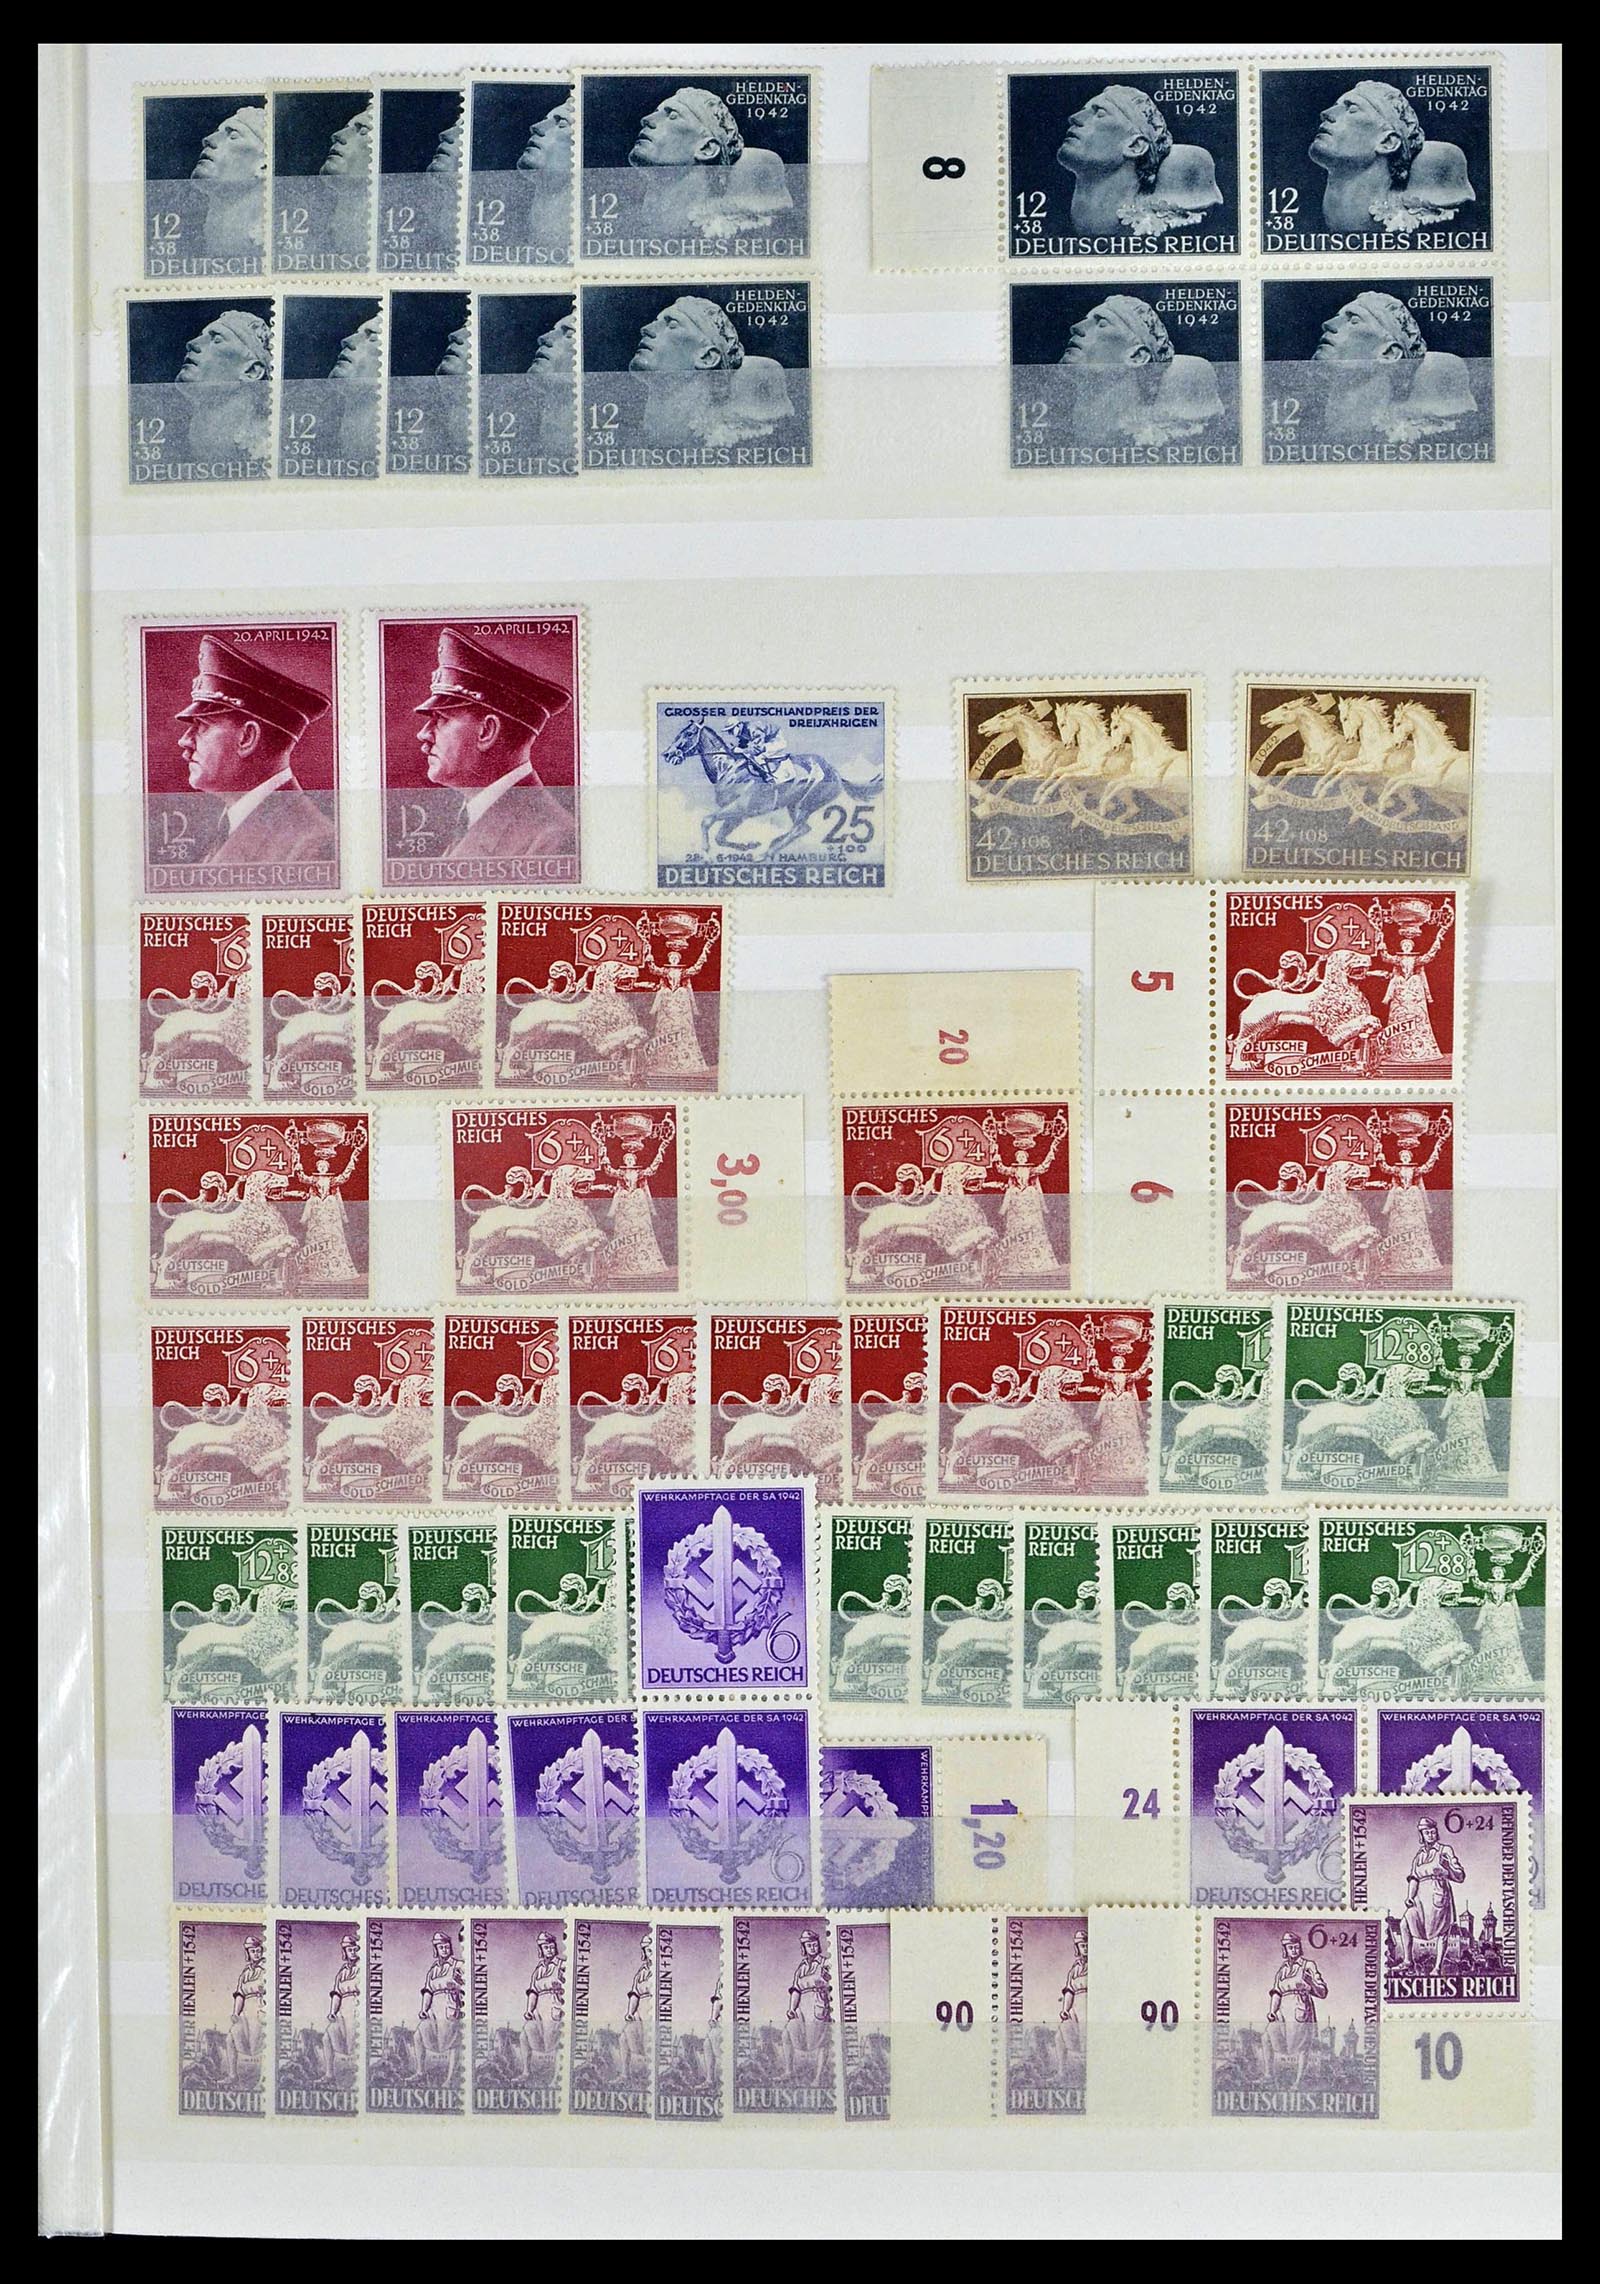 39256 0055 - Stamp collection 39256 German Reich MNH.